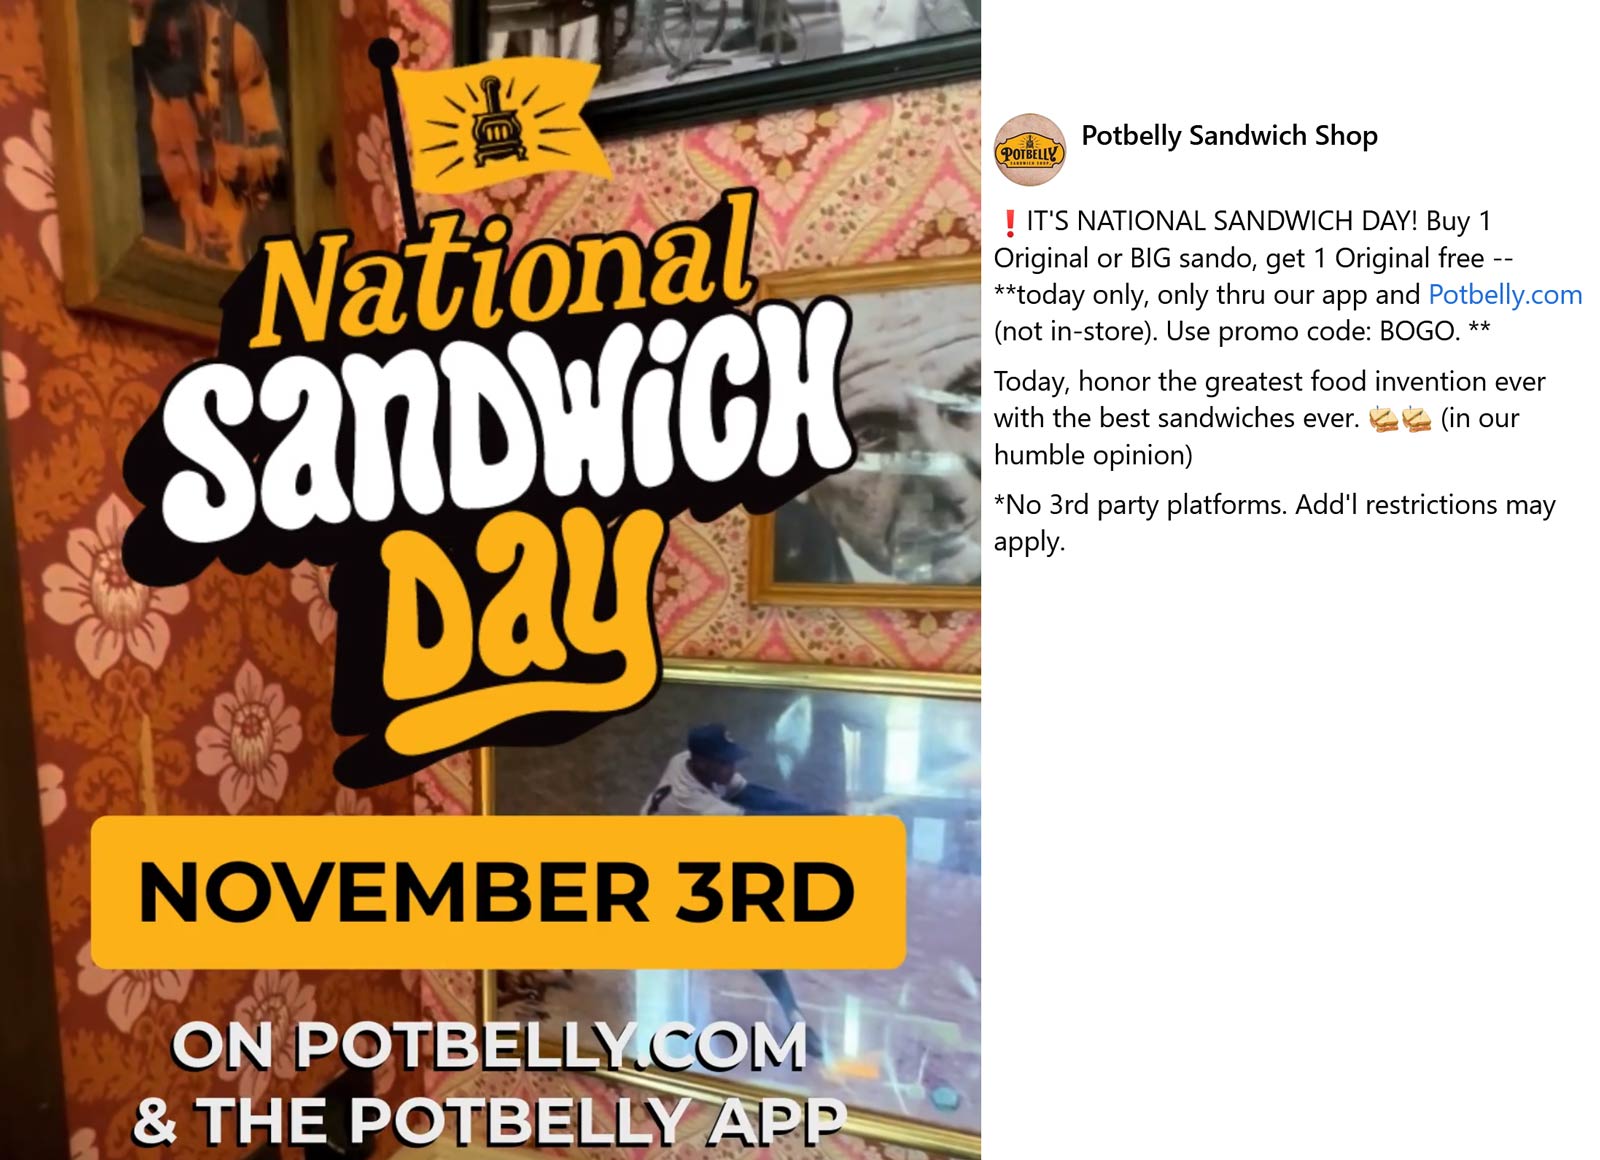 Potbelly restaurants Coupon  Second sandwich free today at Potbelly Sandwich Shop via promo code BOGO #potbelly 